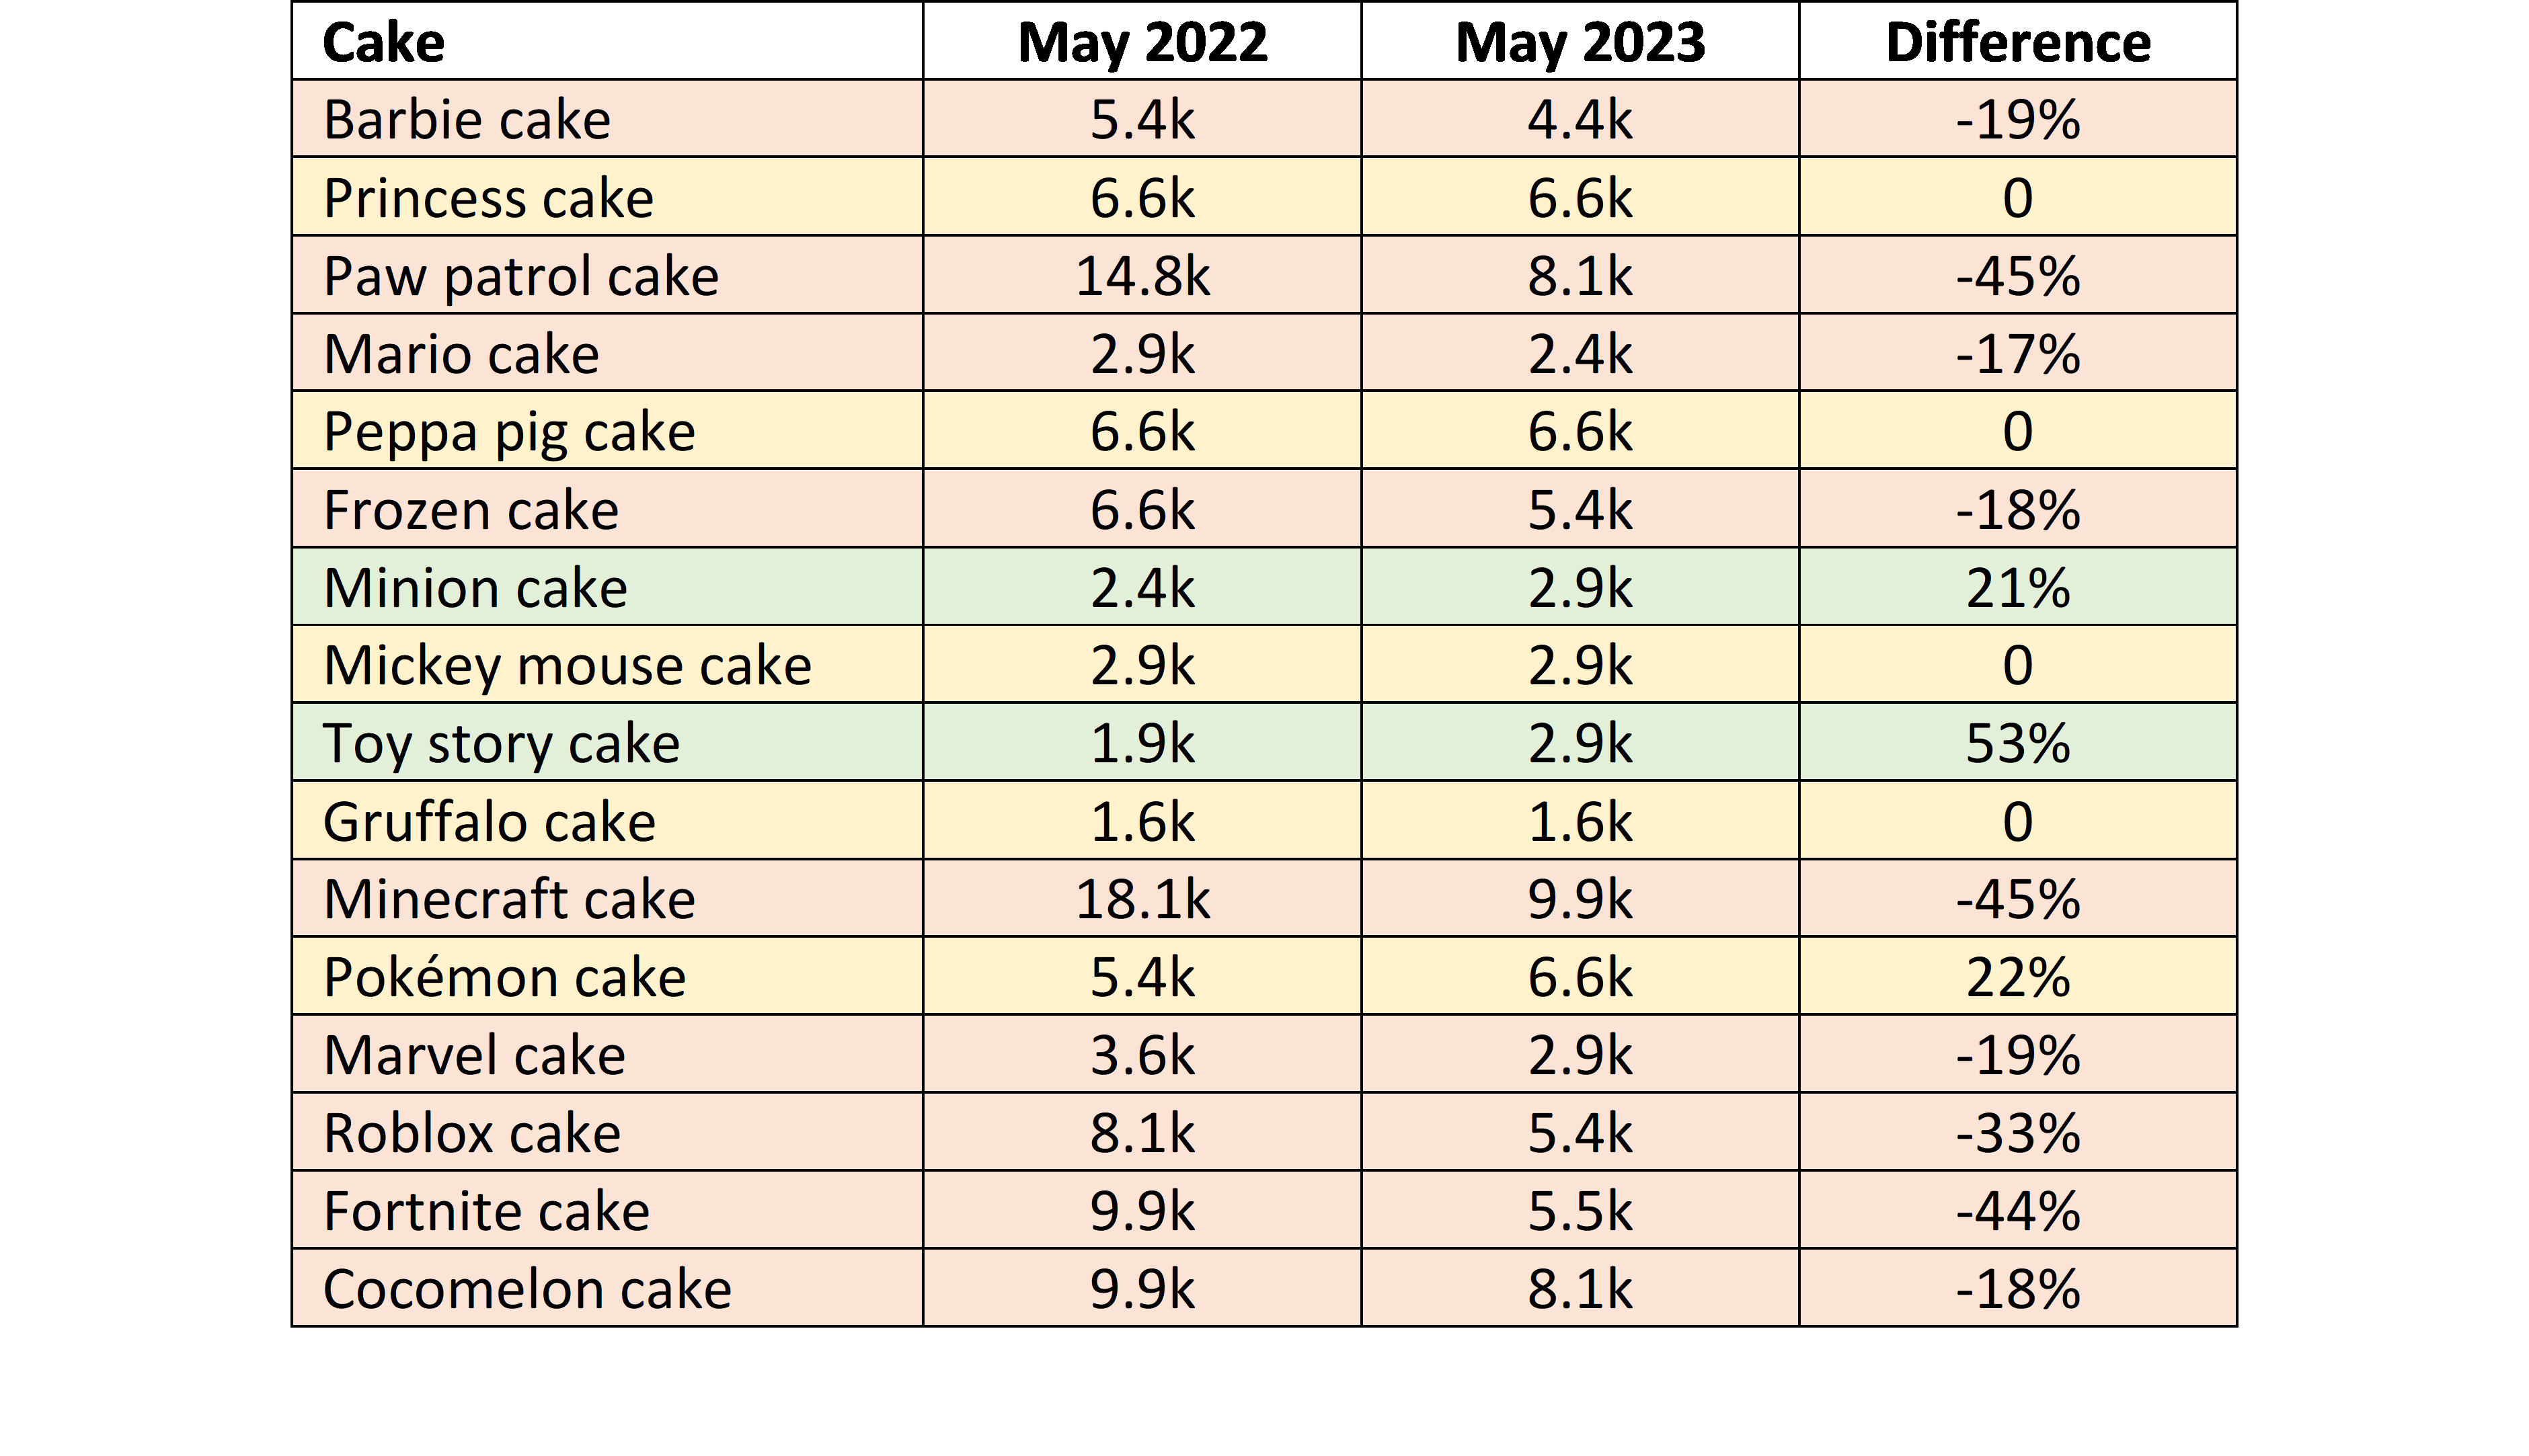 Cartoon cake data image